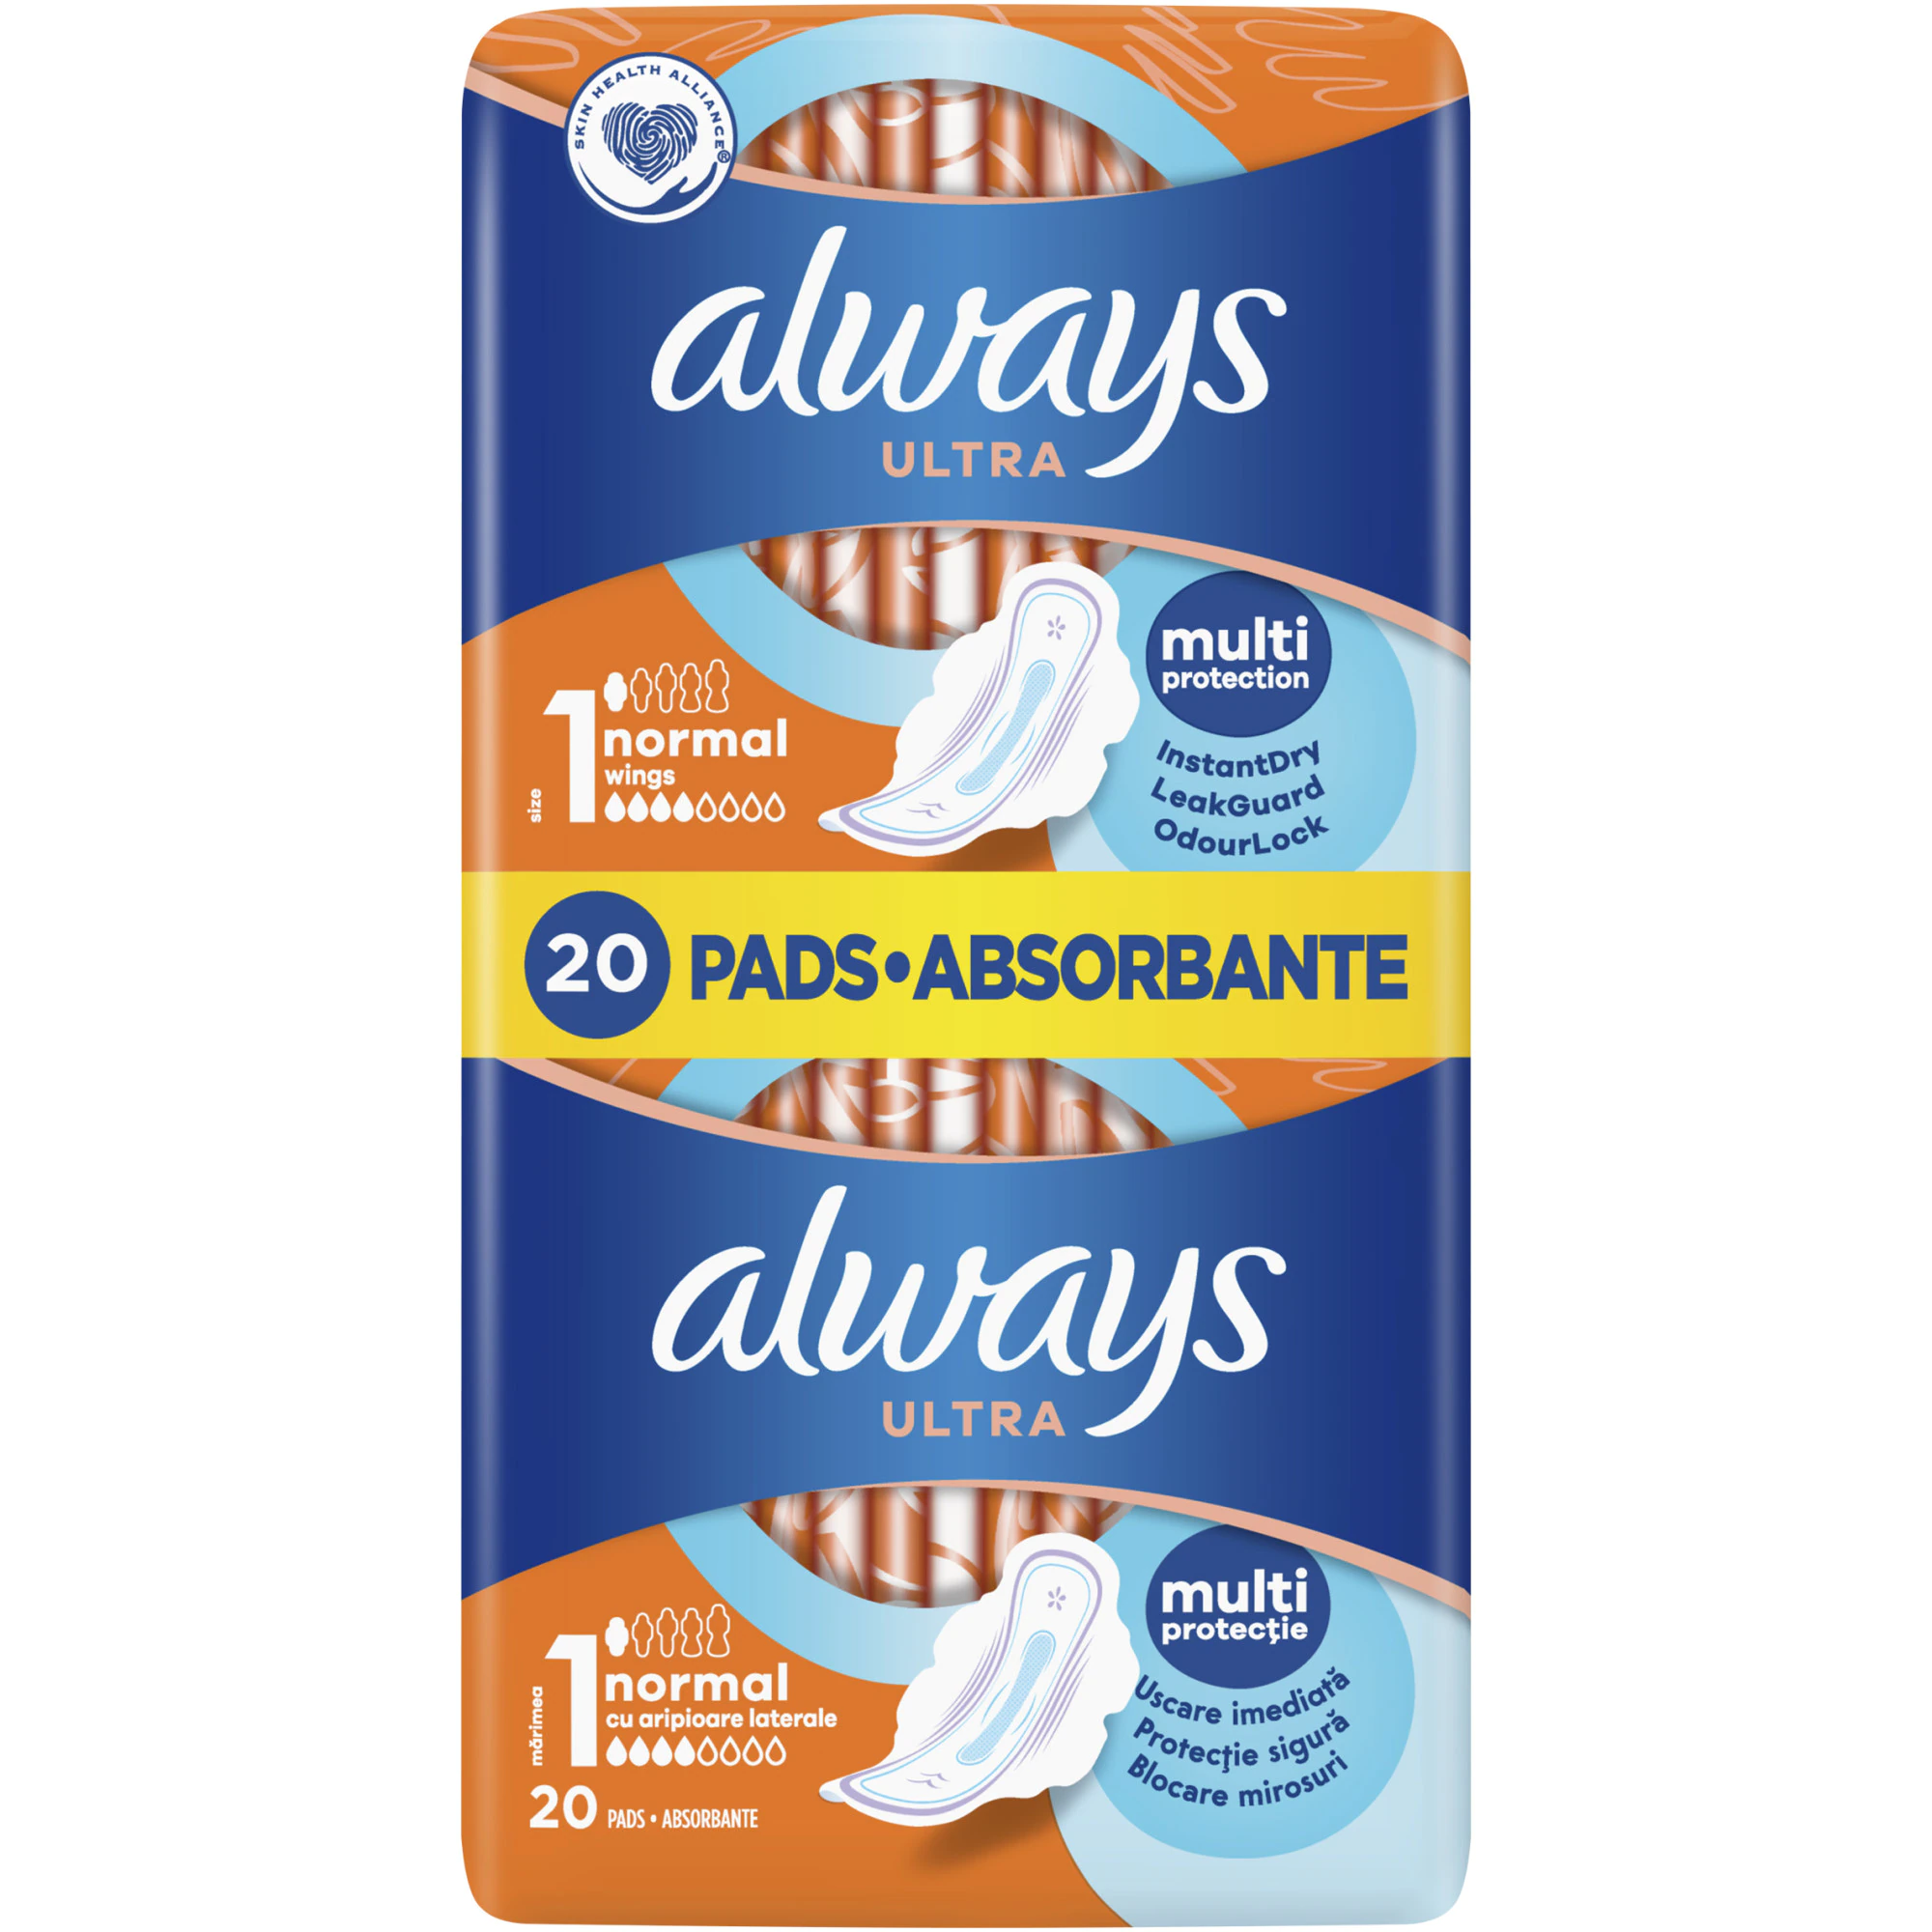 Absorbante si tampoane - Always ultra normal instant dry, 20 bucăți, Procter & Gamble, sinapis.ro